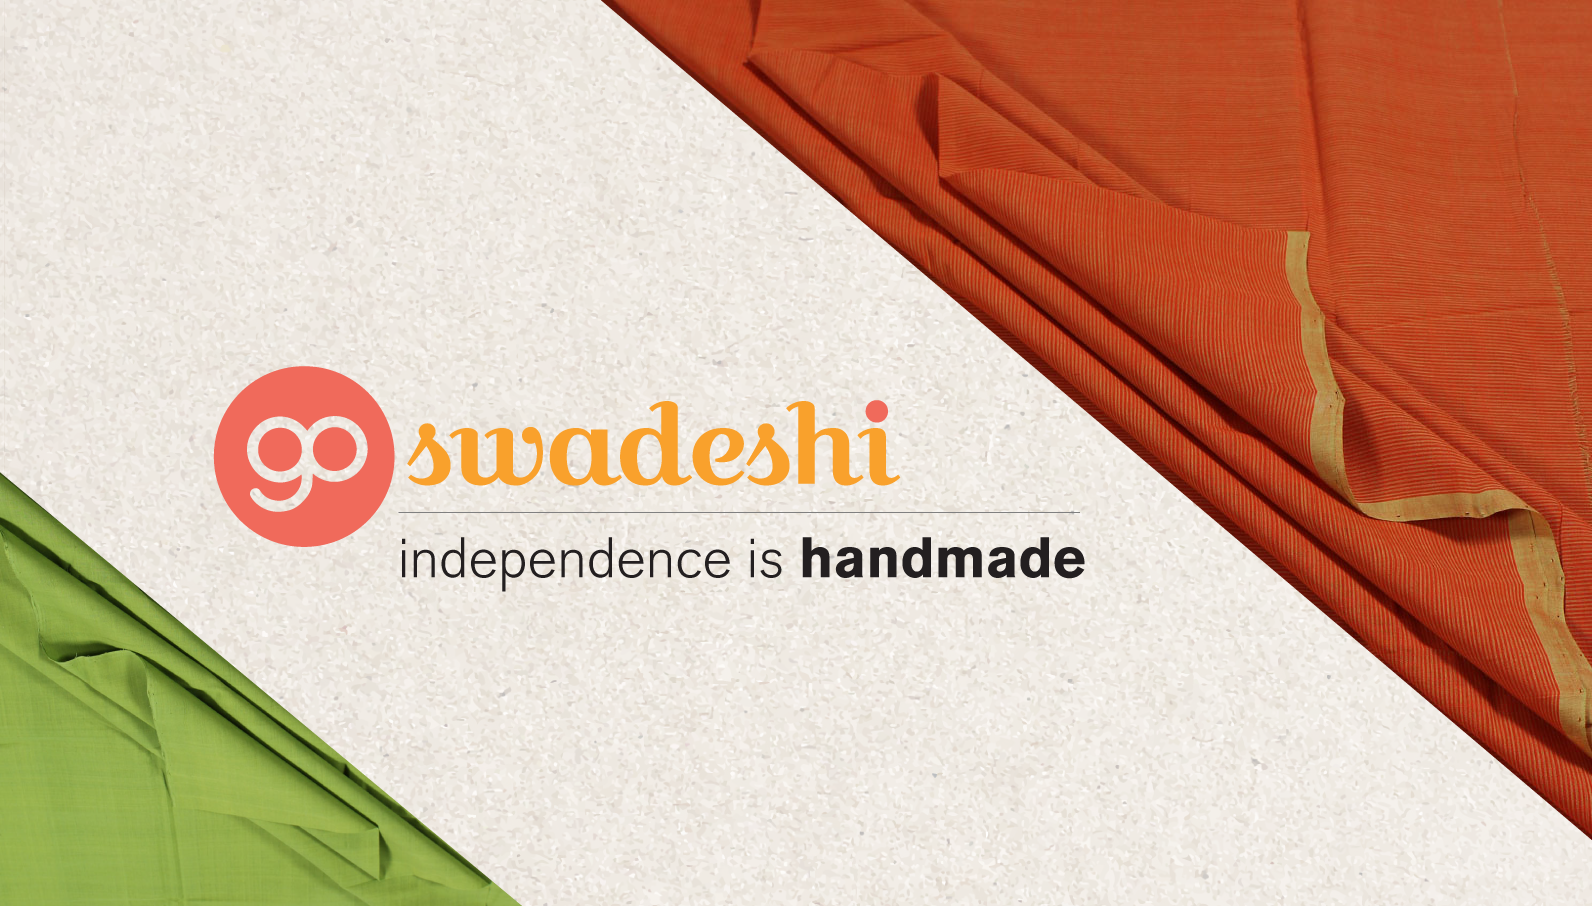 Go Swadeshi - Independence is Handmade